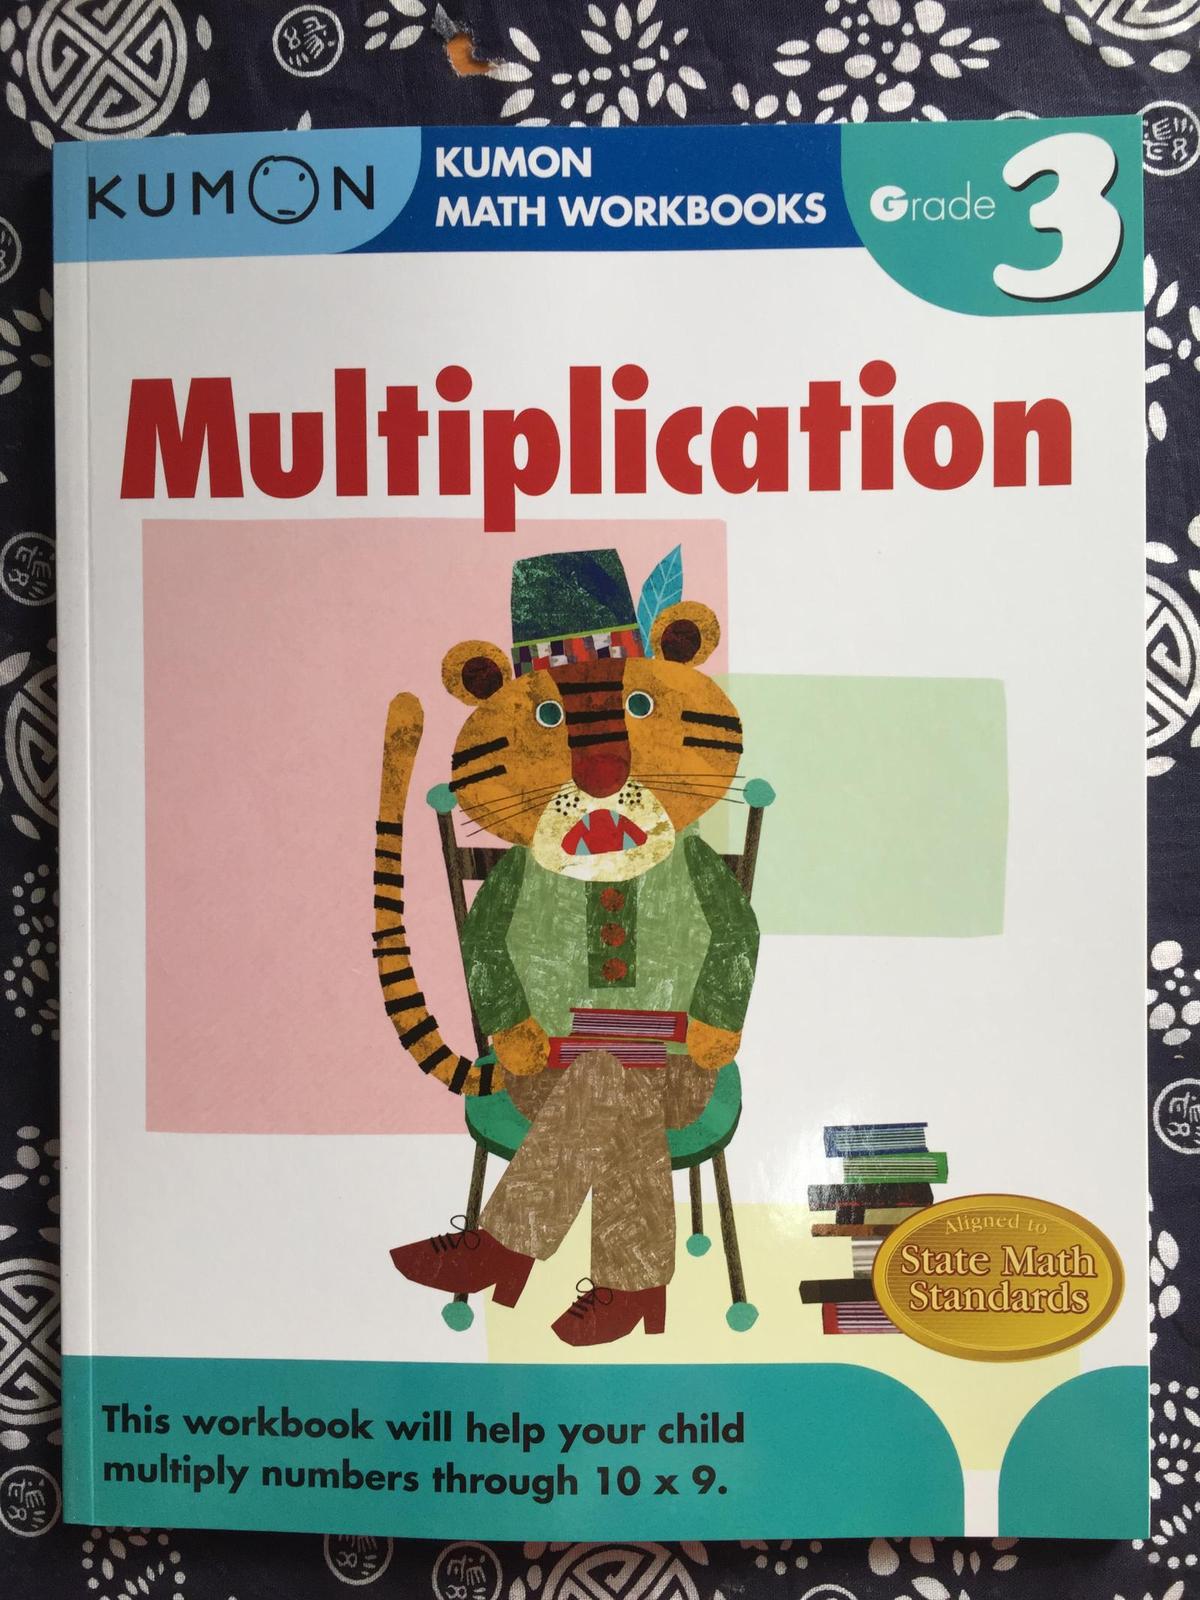 Kumon Math Workbooks• Multiplication• Grade 3